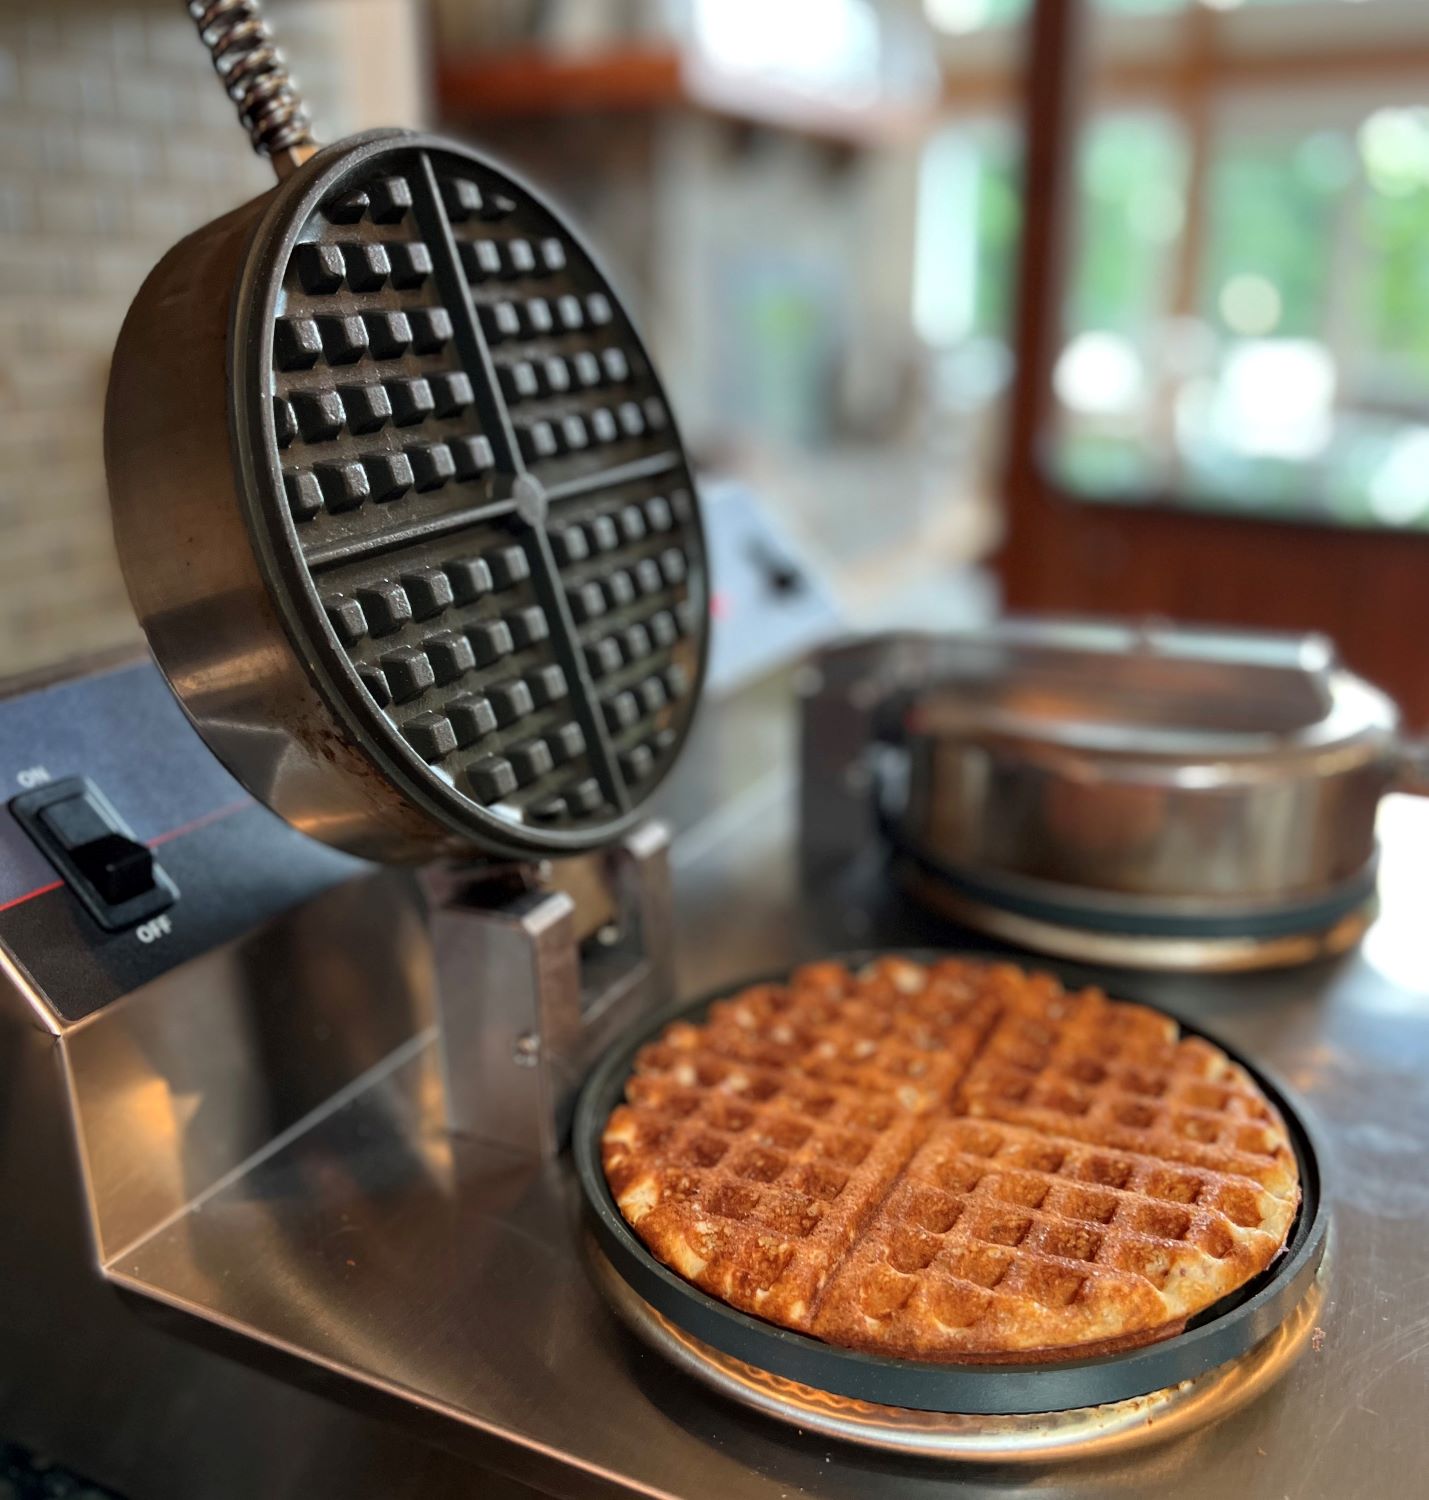 Waffles breakfast homemade fresh family recipe healthy sweet savory brunch lunch dinner 